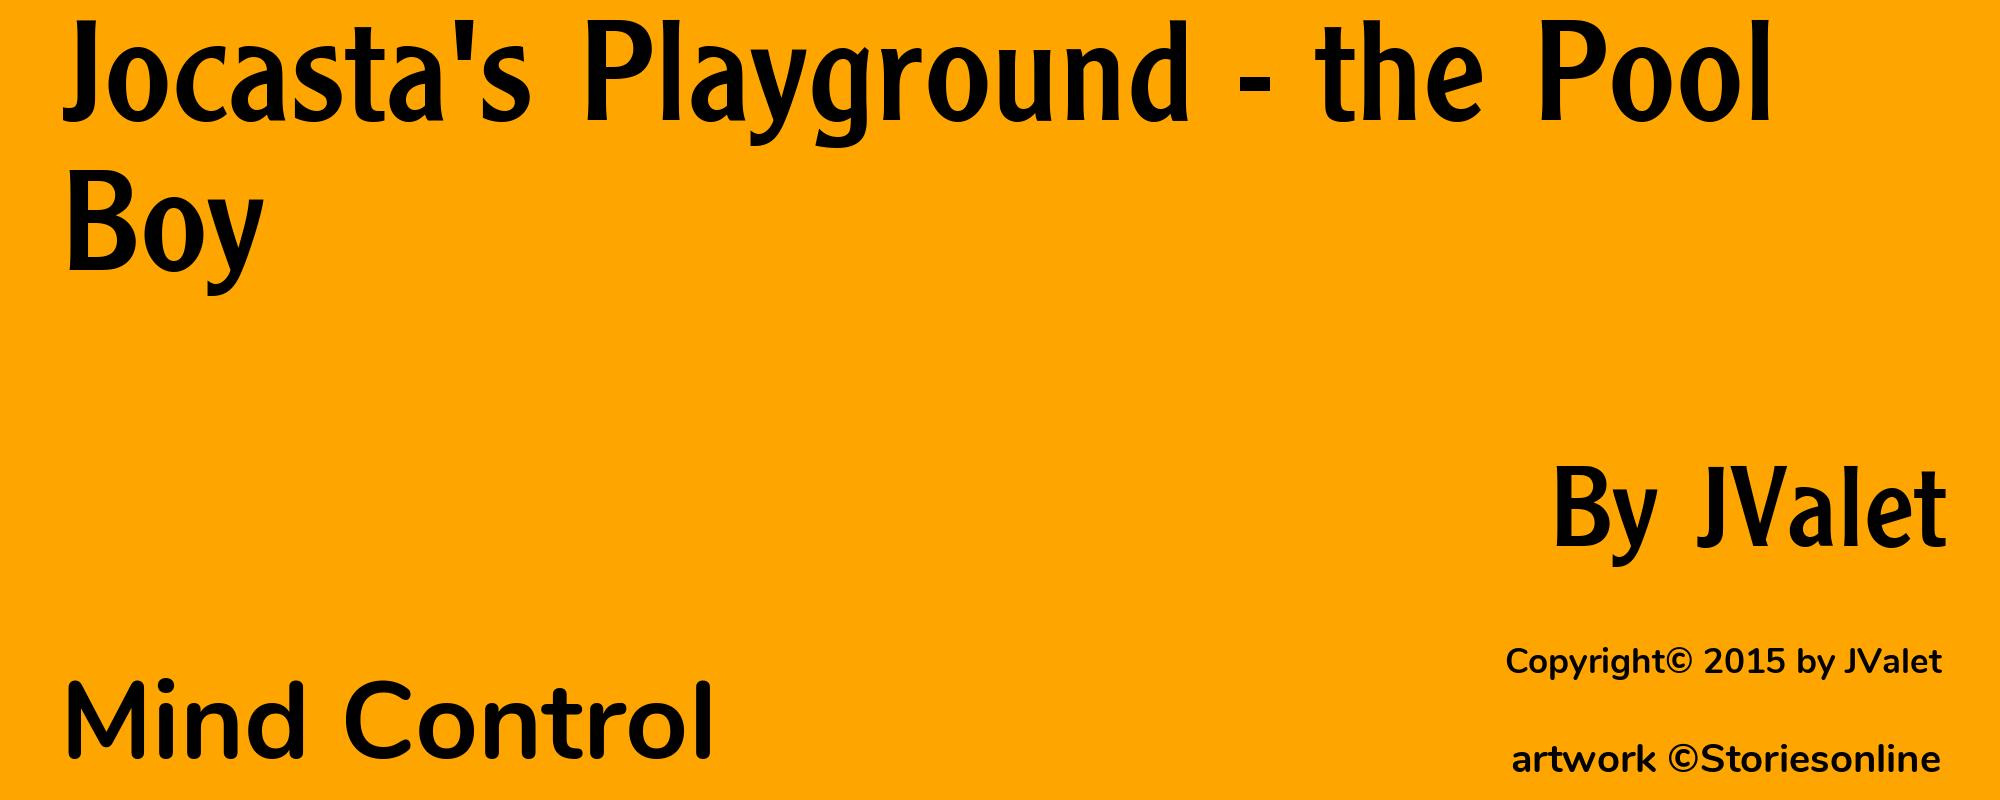 Jocasta's Playground - the Pool Boy - Cover